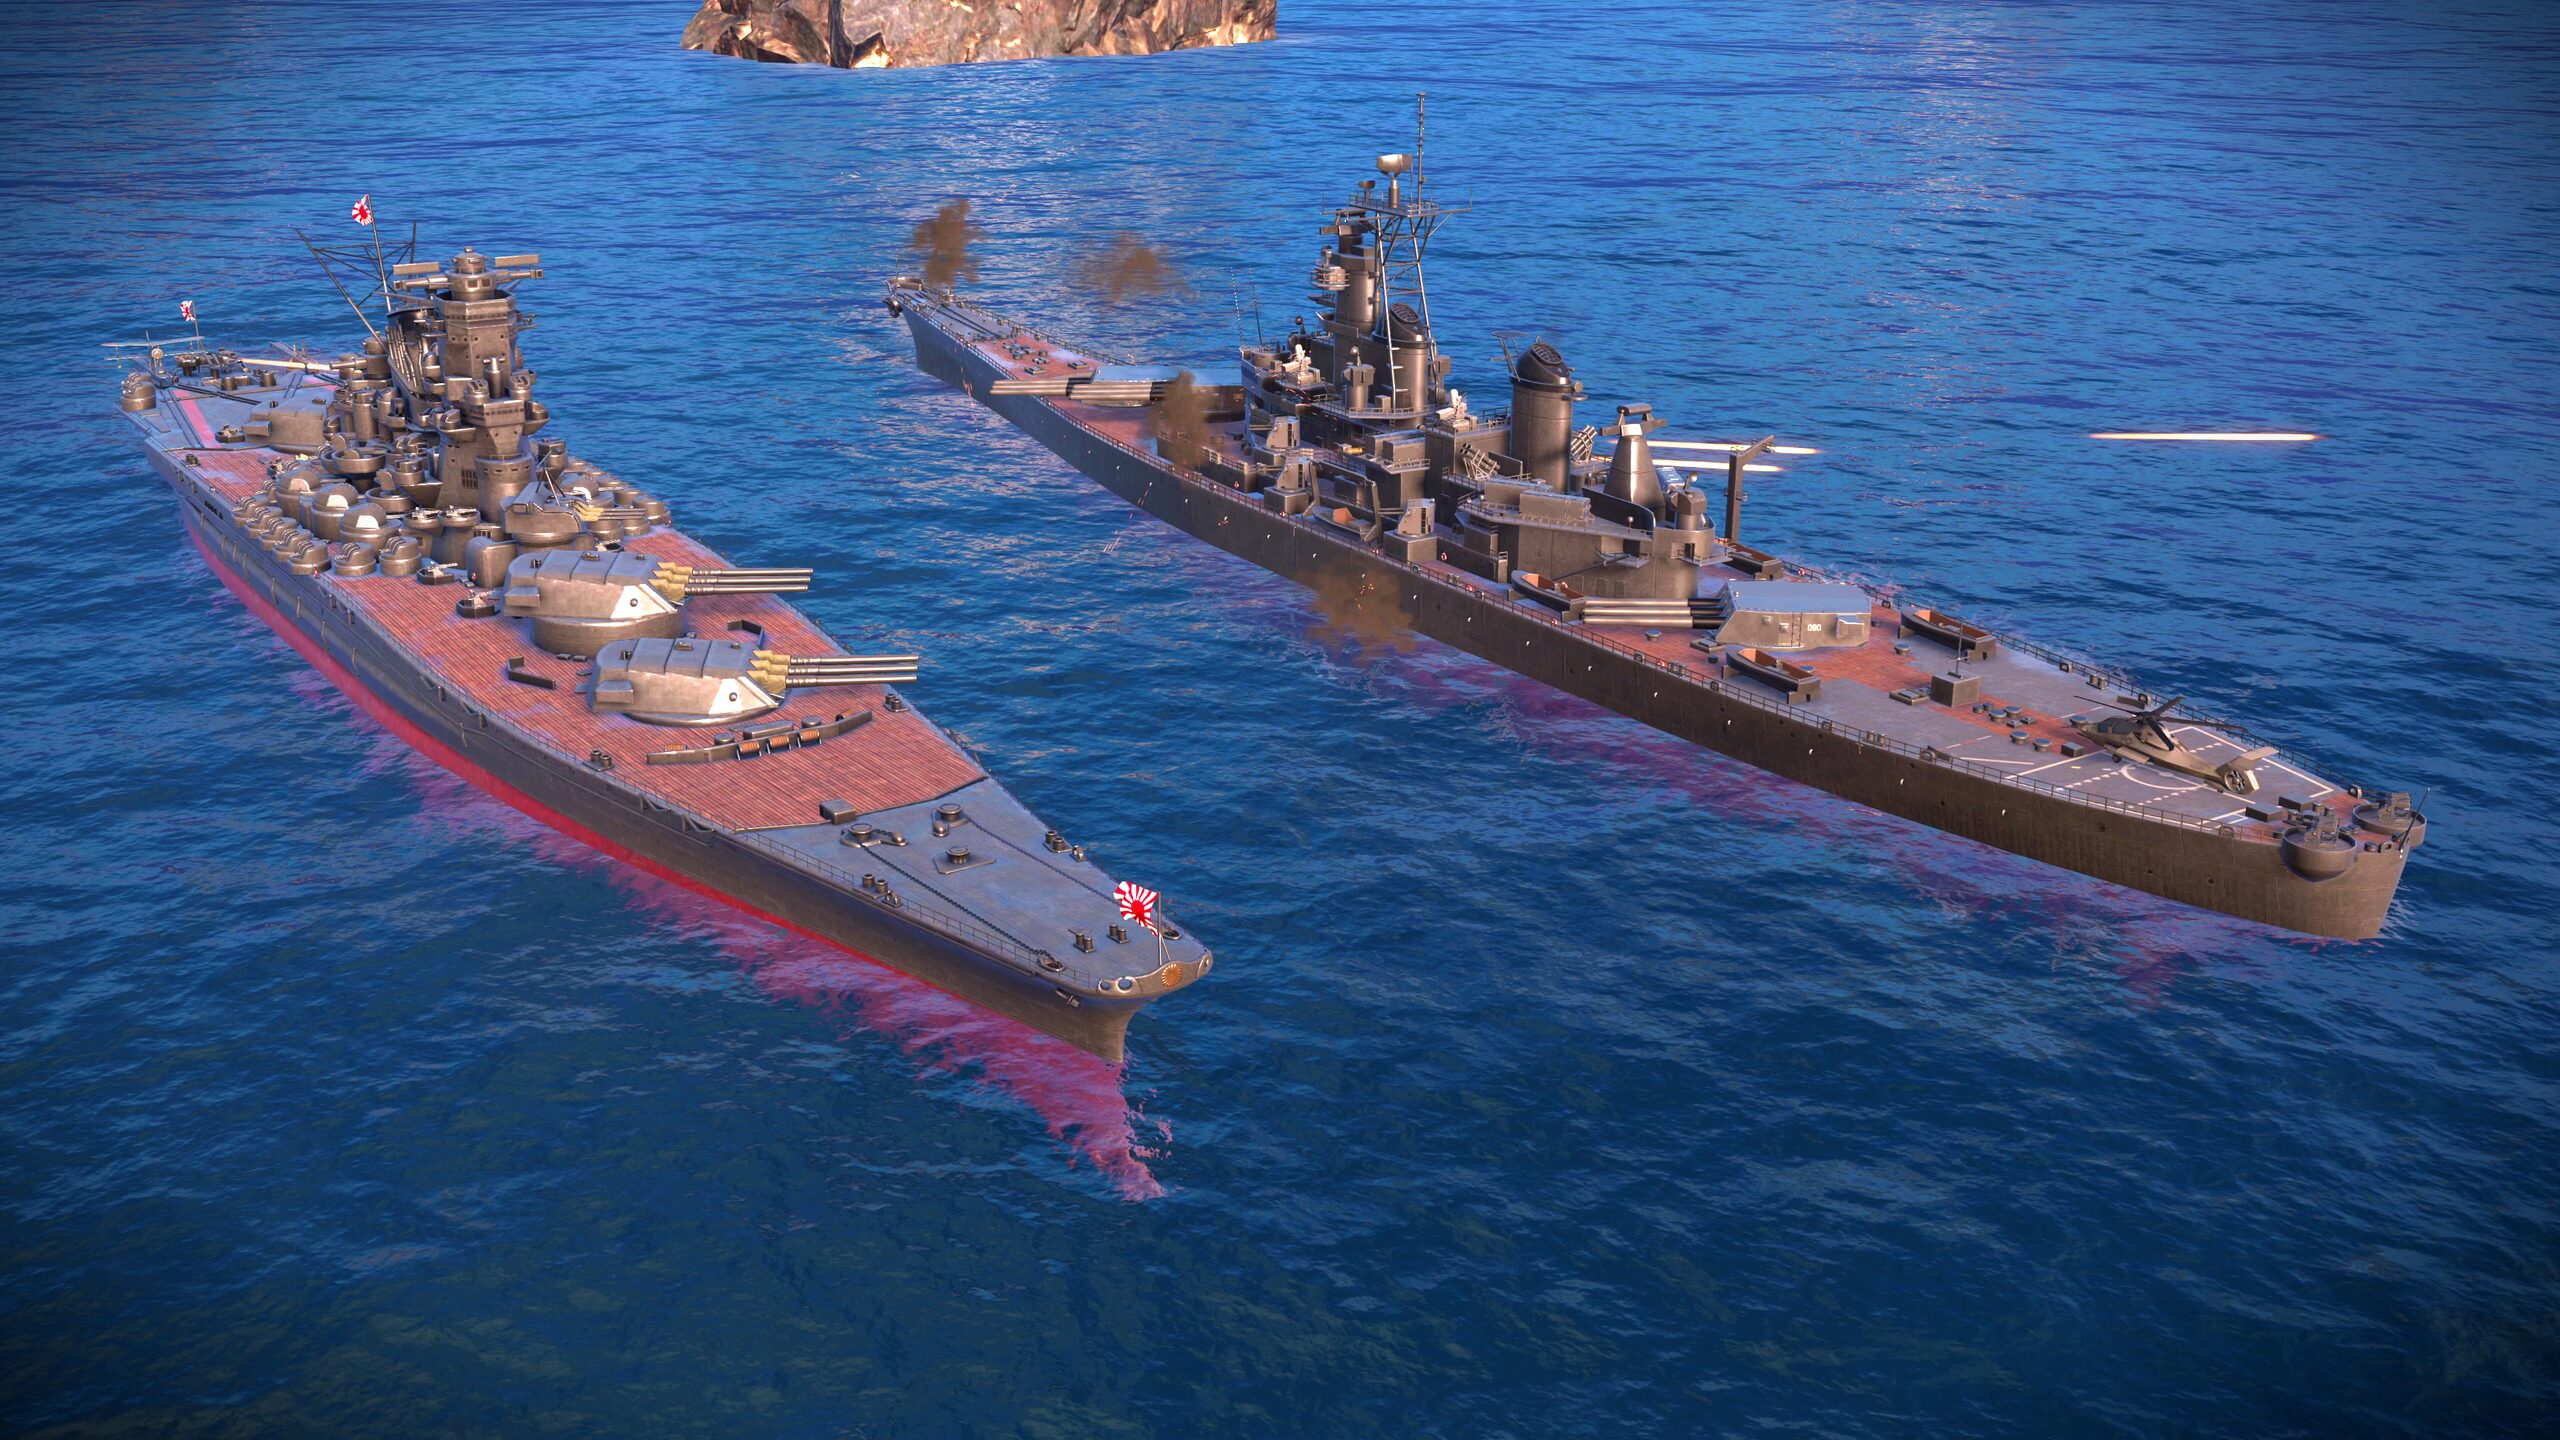 542151 1600x1200 Background High Resolution: battleship yamato JPG 209 kB -  Rare Gallery HD Wallpapers